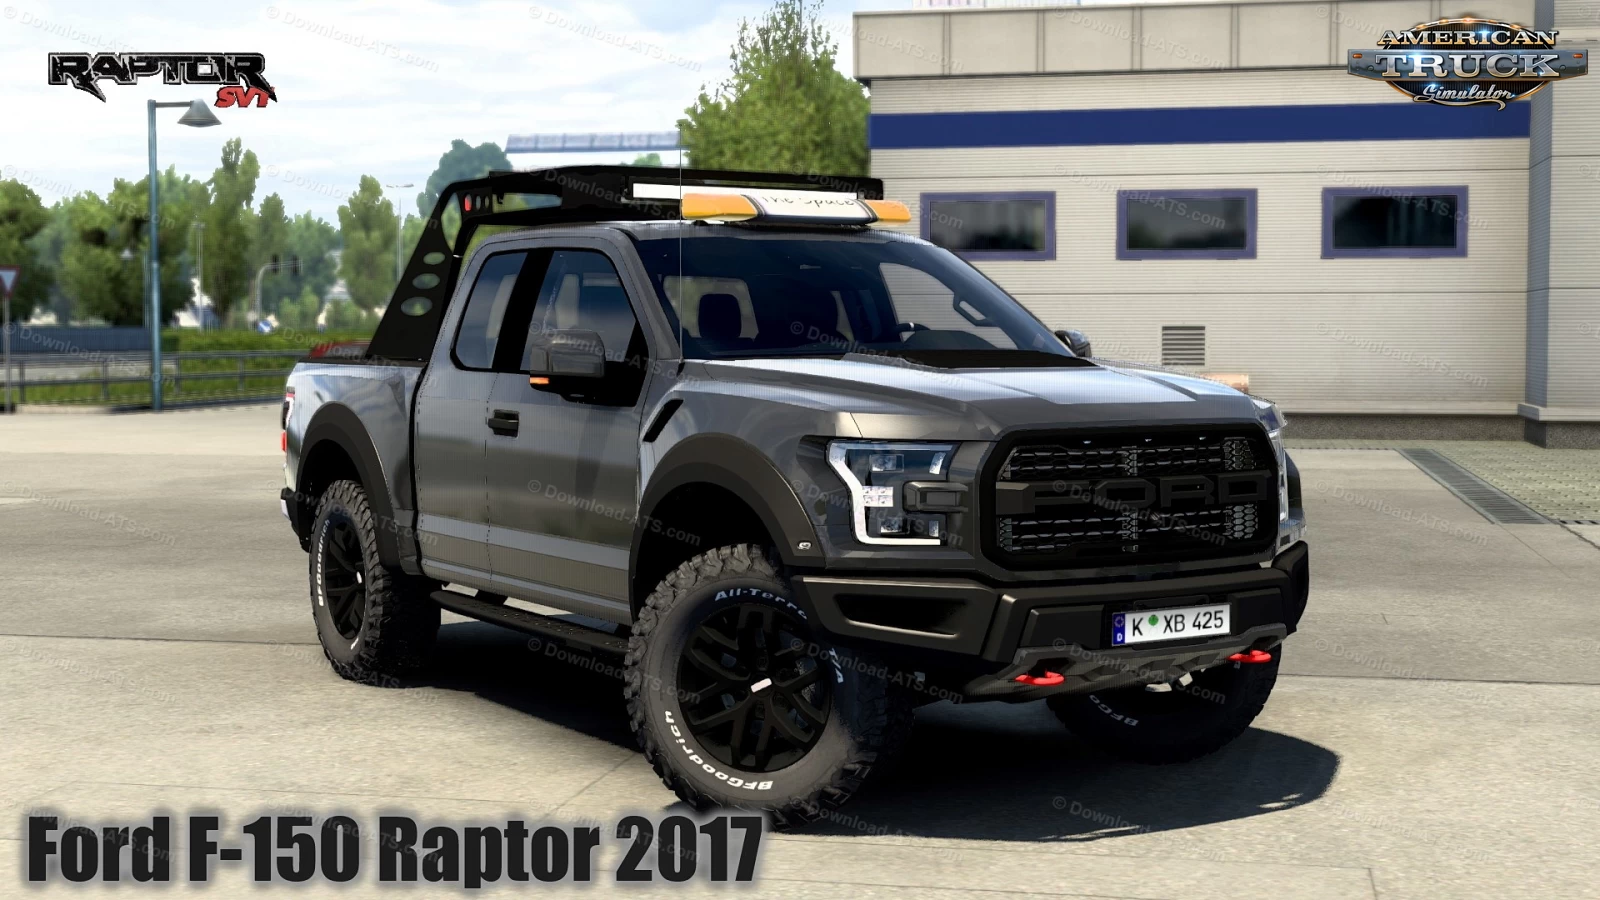 Ford F-150 Raptor 2017 + Interior v2.0 (1.45.x) for ATS